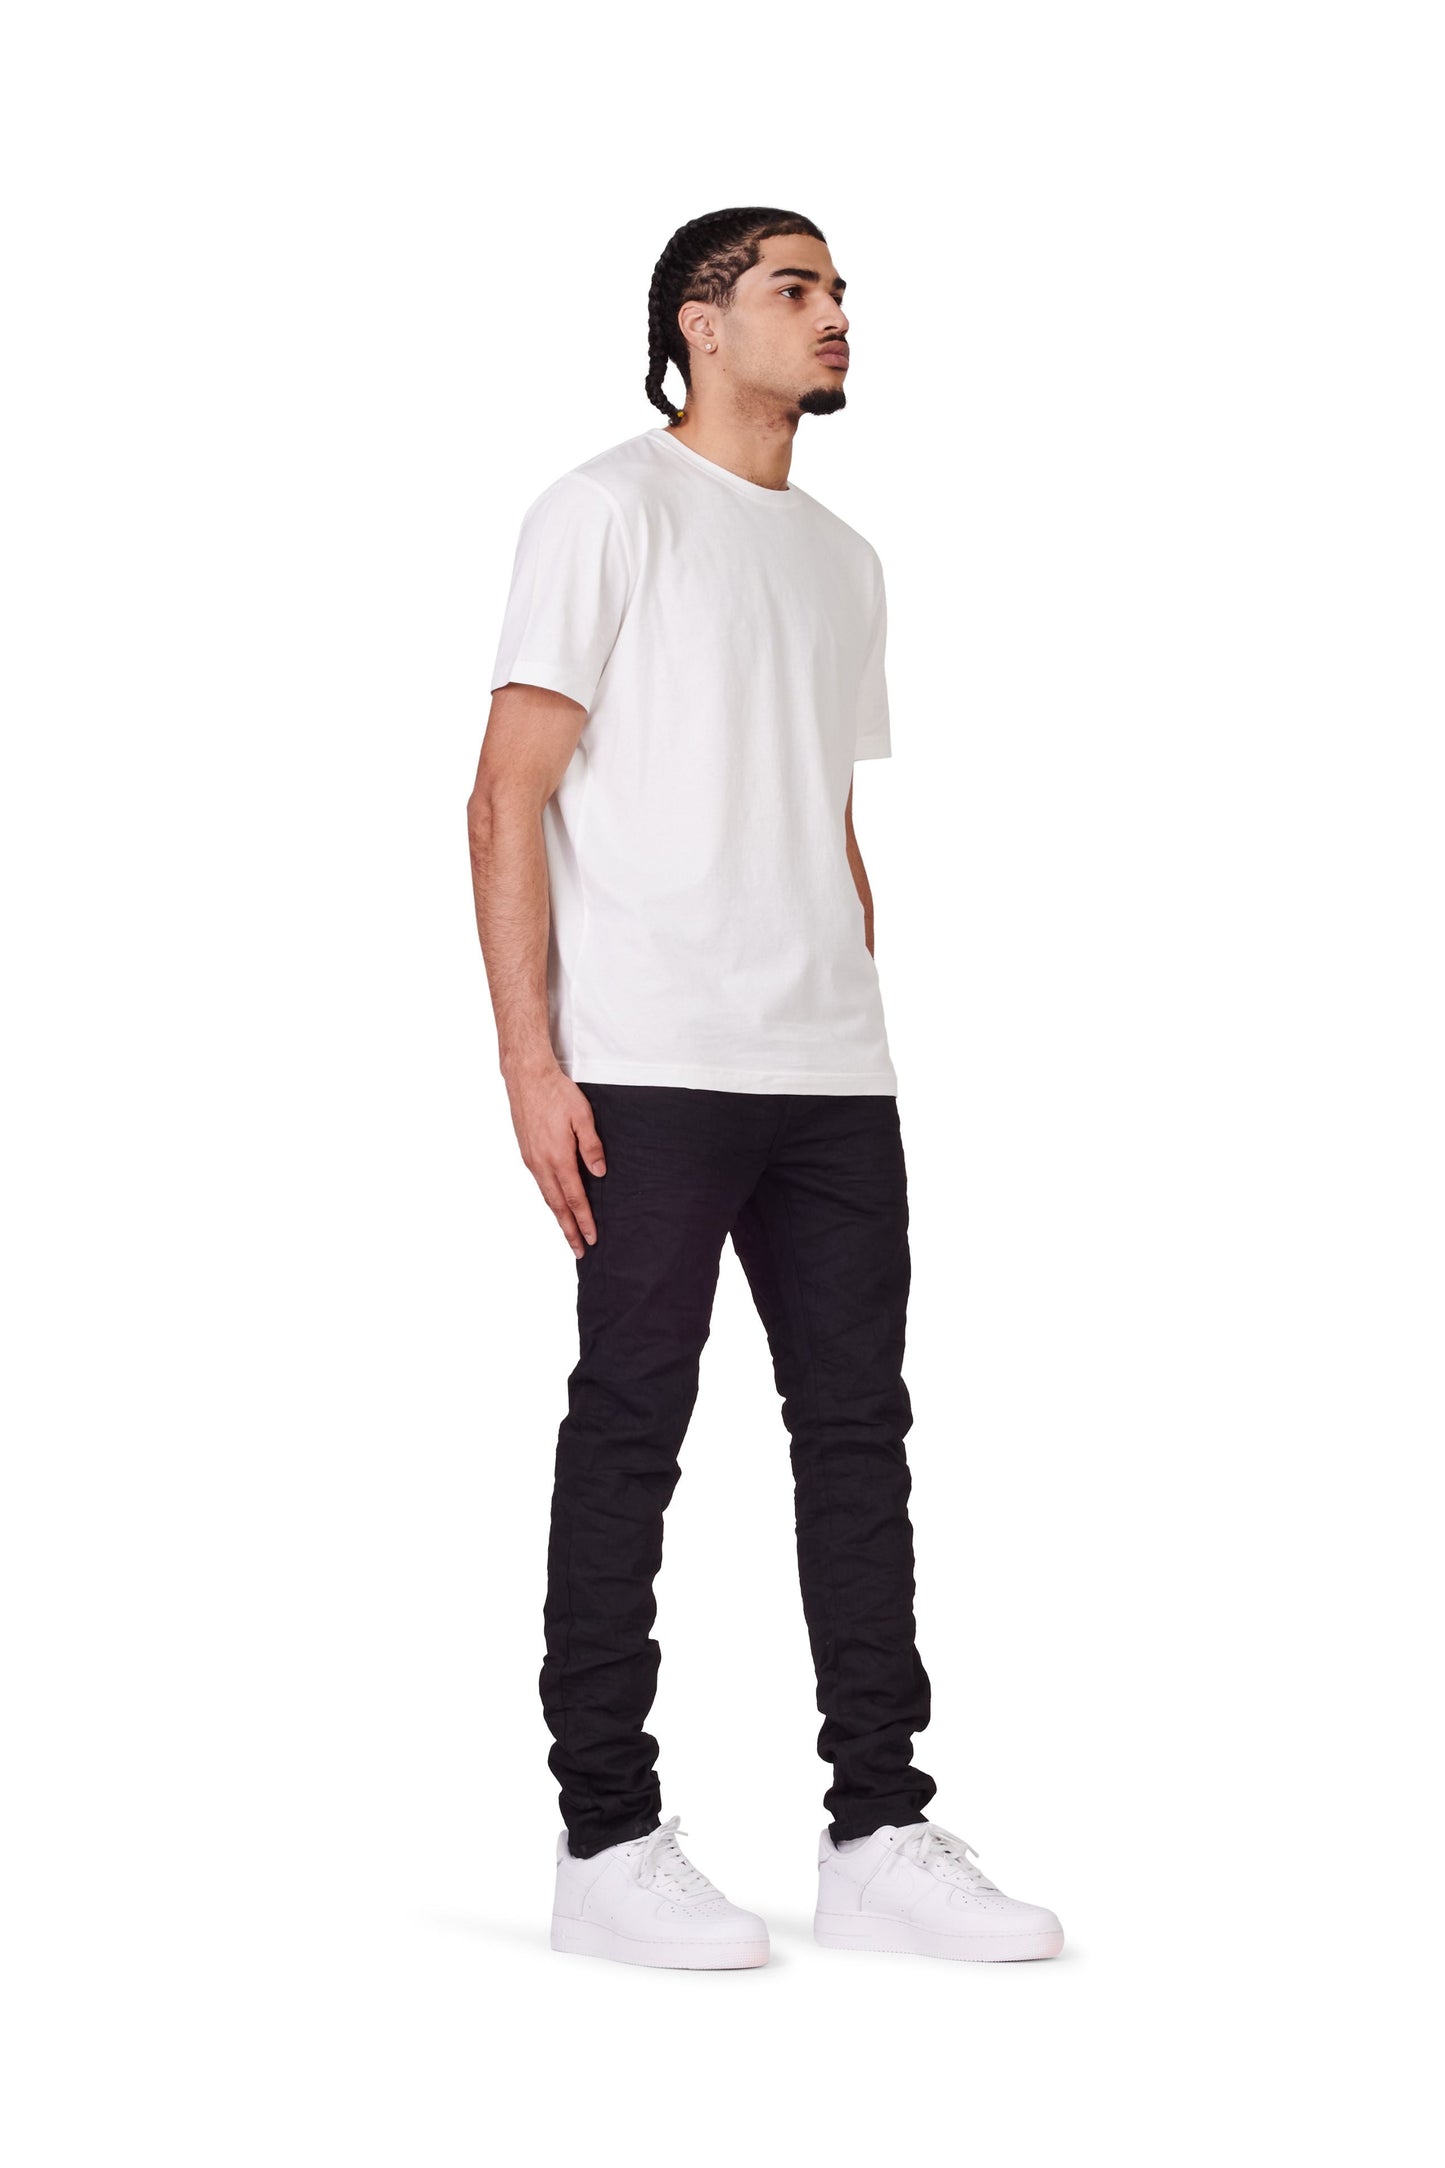 PURPLE BRAND - Men's Denim Jean - Low Rise Skinny - Style No. P001 - Black Raw - Model Side Pose